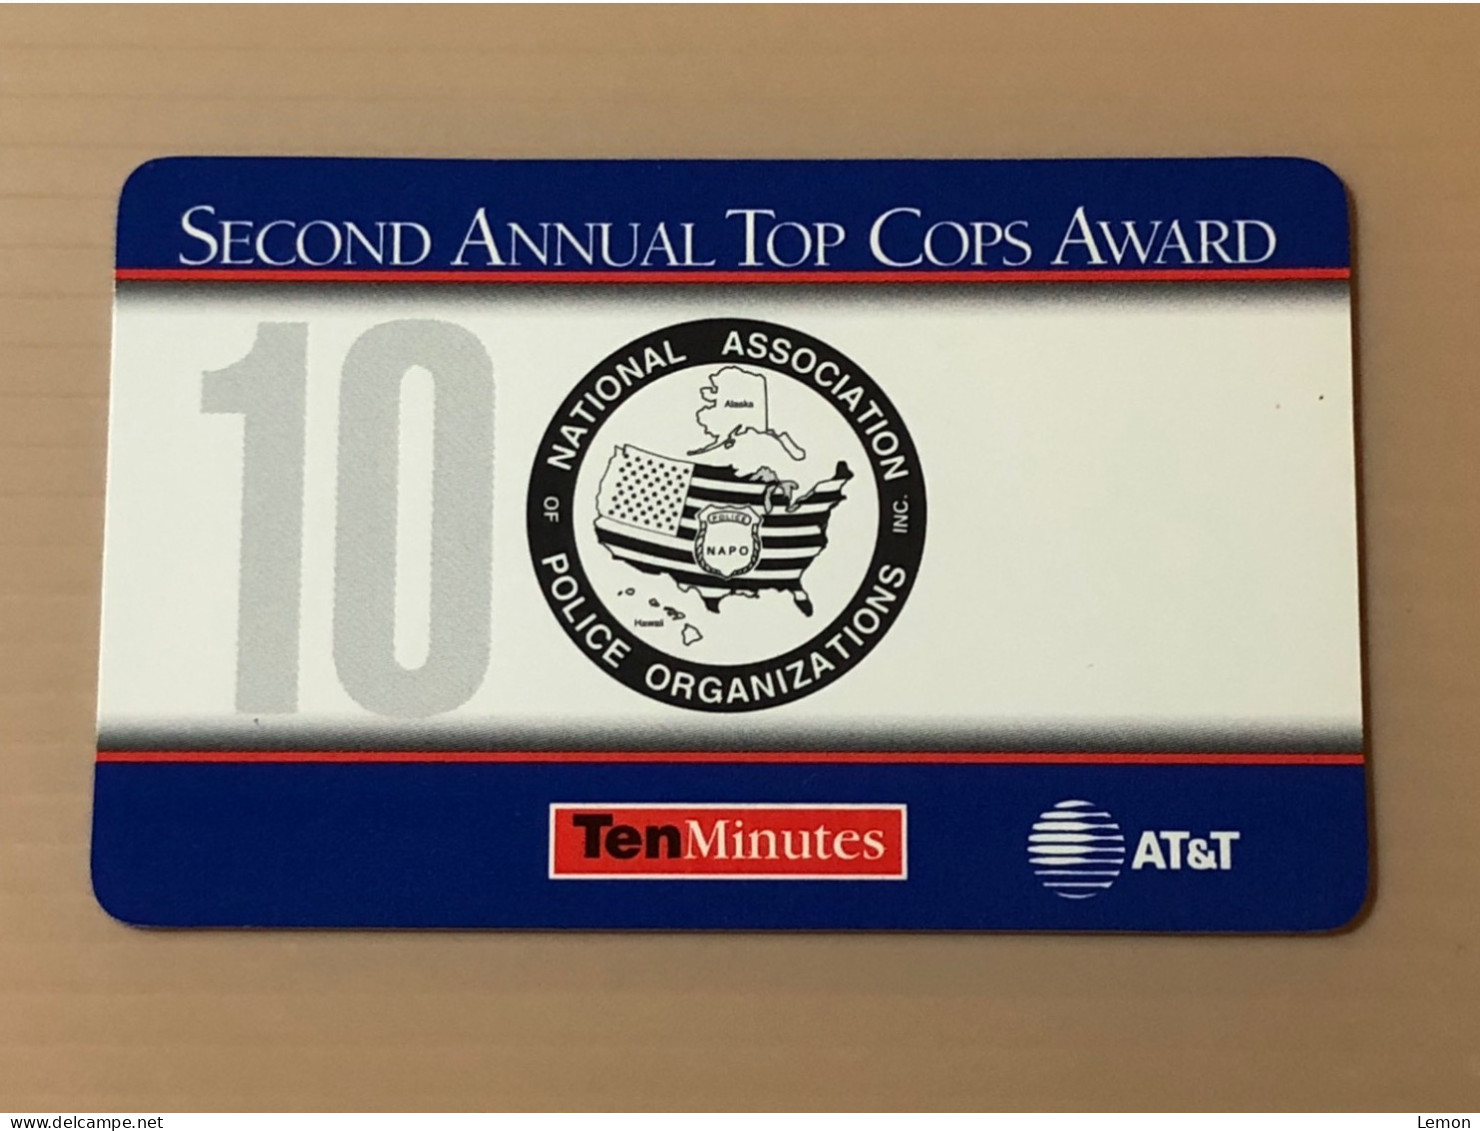 Mint USA UNITED STATES America Prepaid Telecard Phonecard, AT&T Annual Top Cops Award SAMPLE CARD, Set Of 1 Mint Card - Collezioni